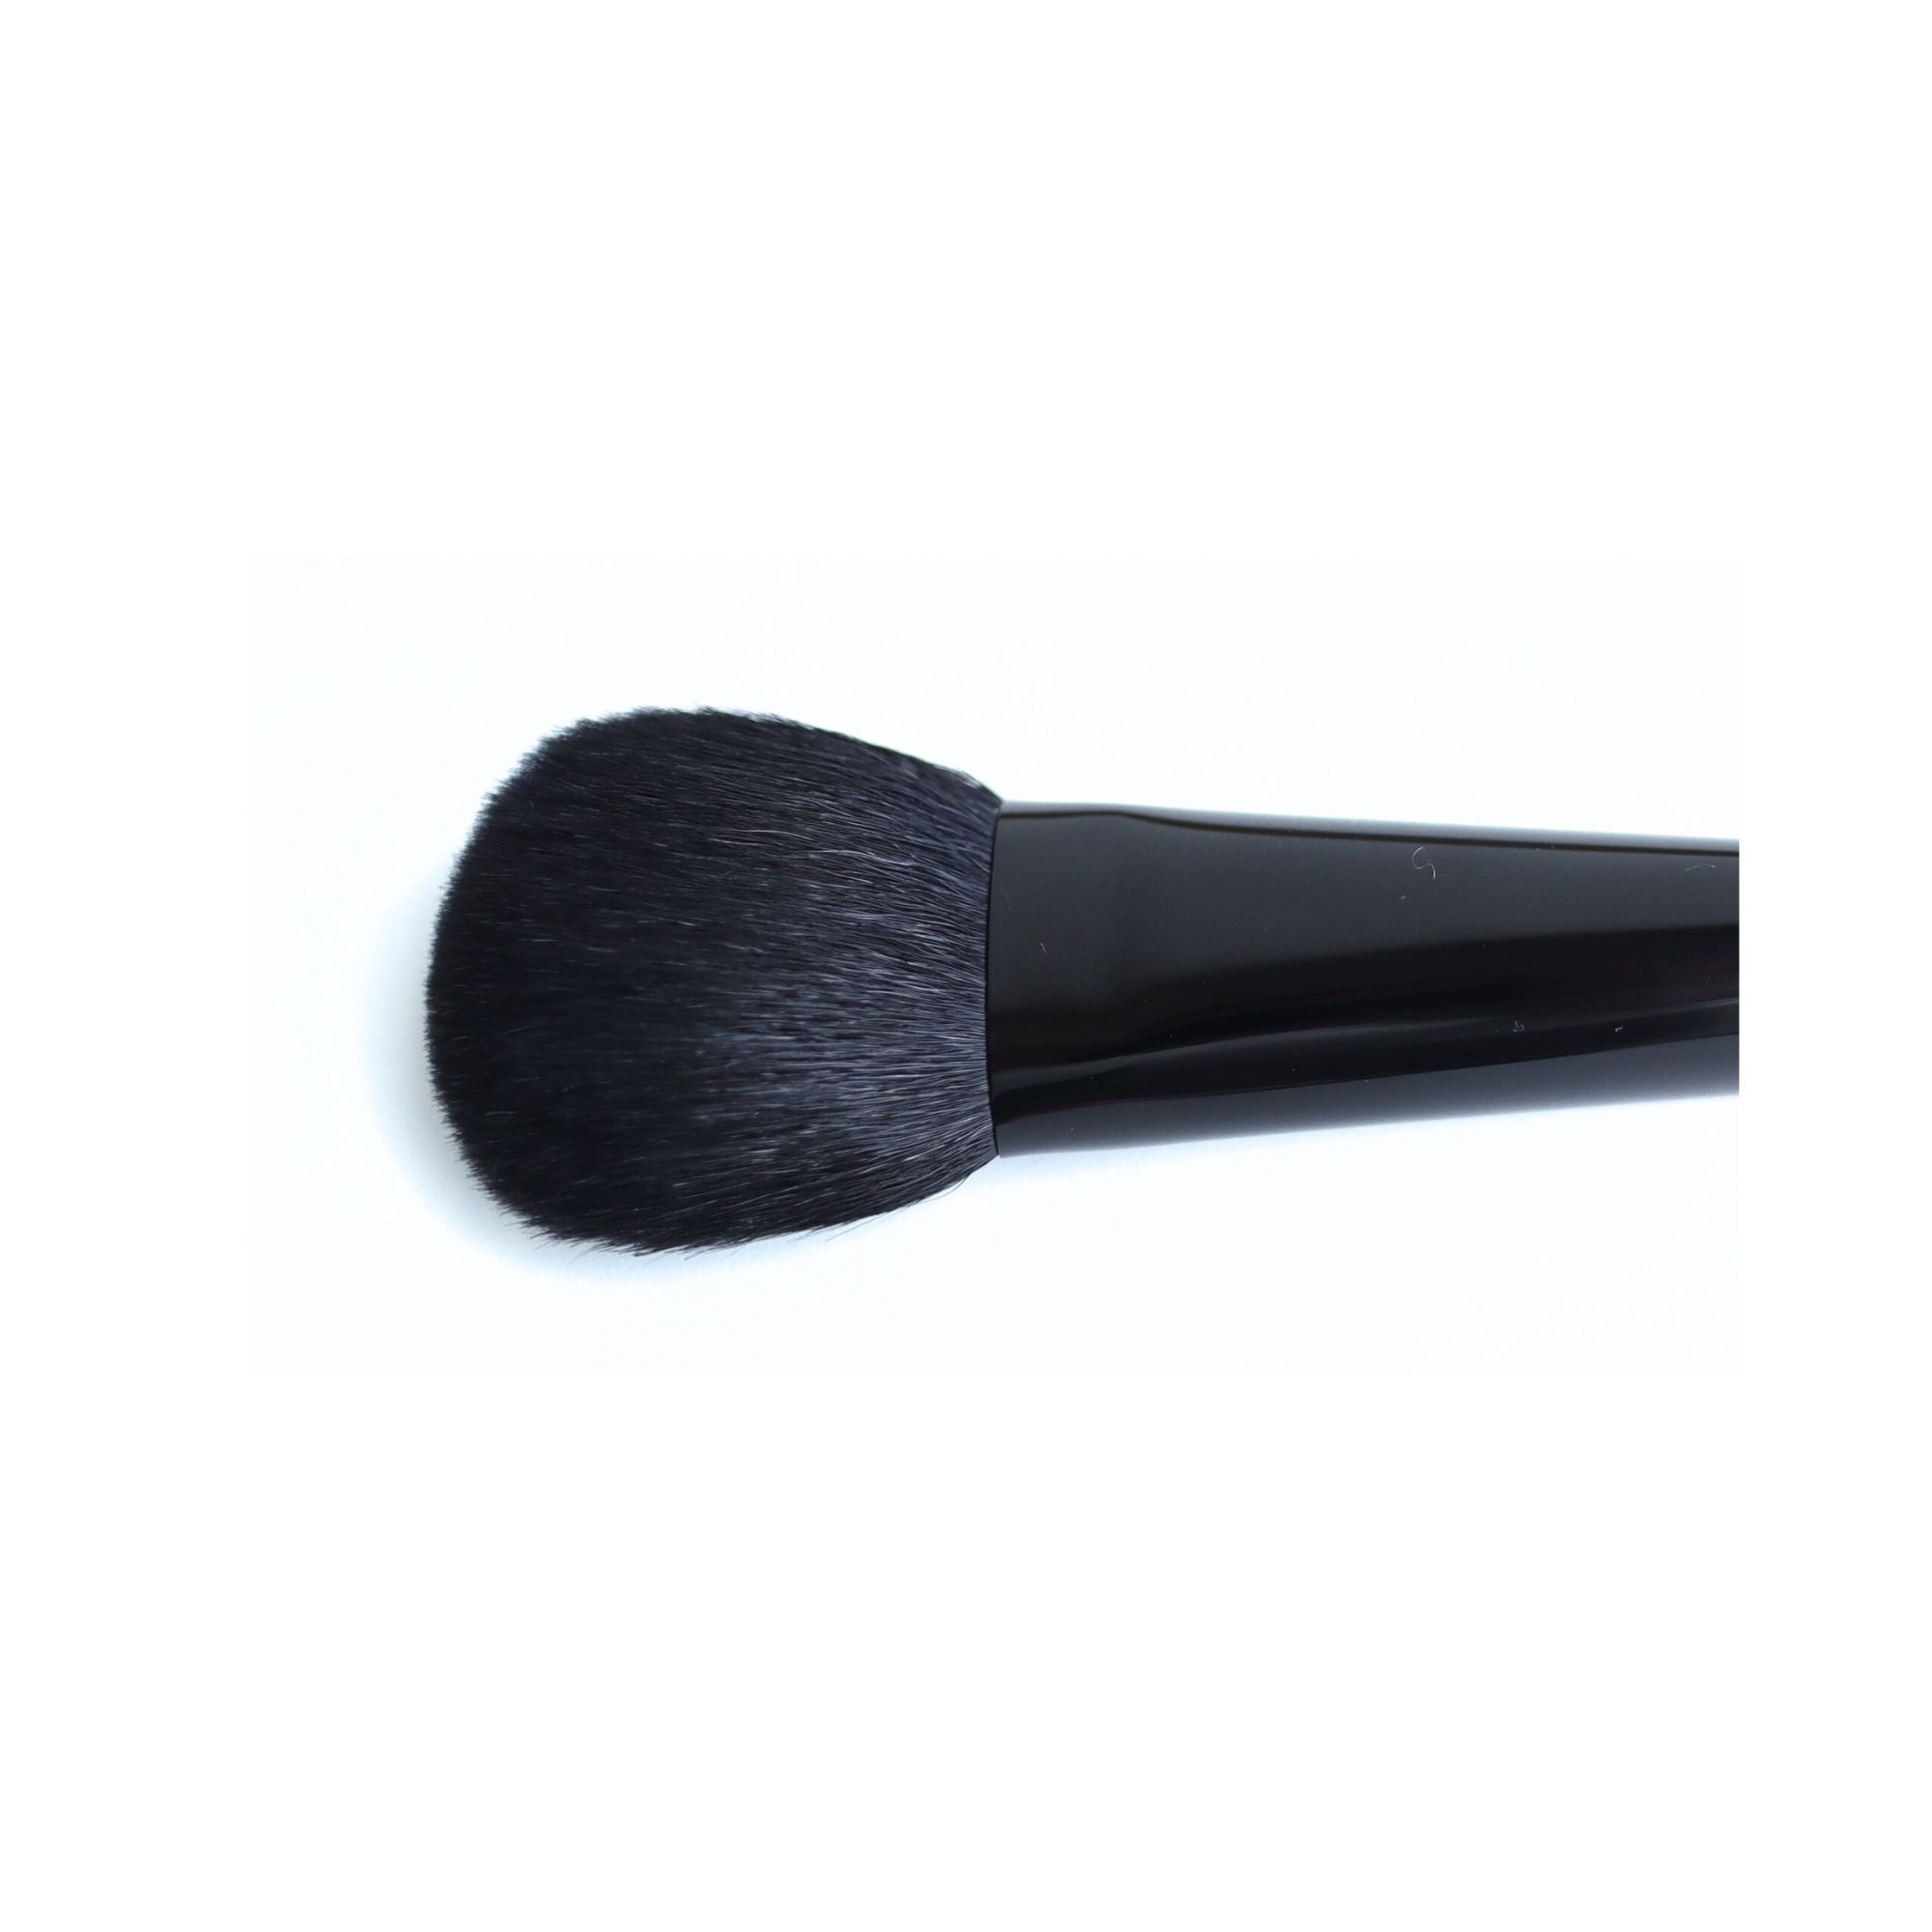 Koyudo Powder/Cheek Brush (2307-23) - Fude Beauty, Japanese Makeup Brushes